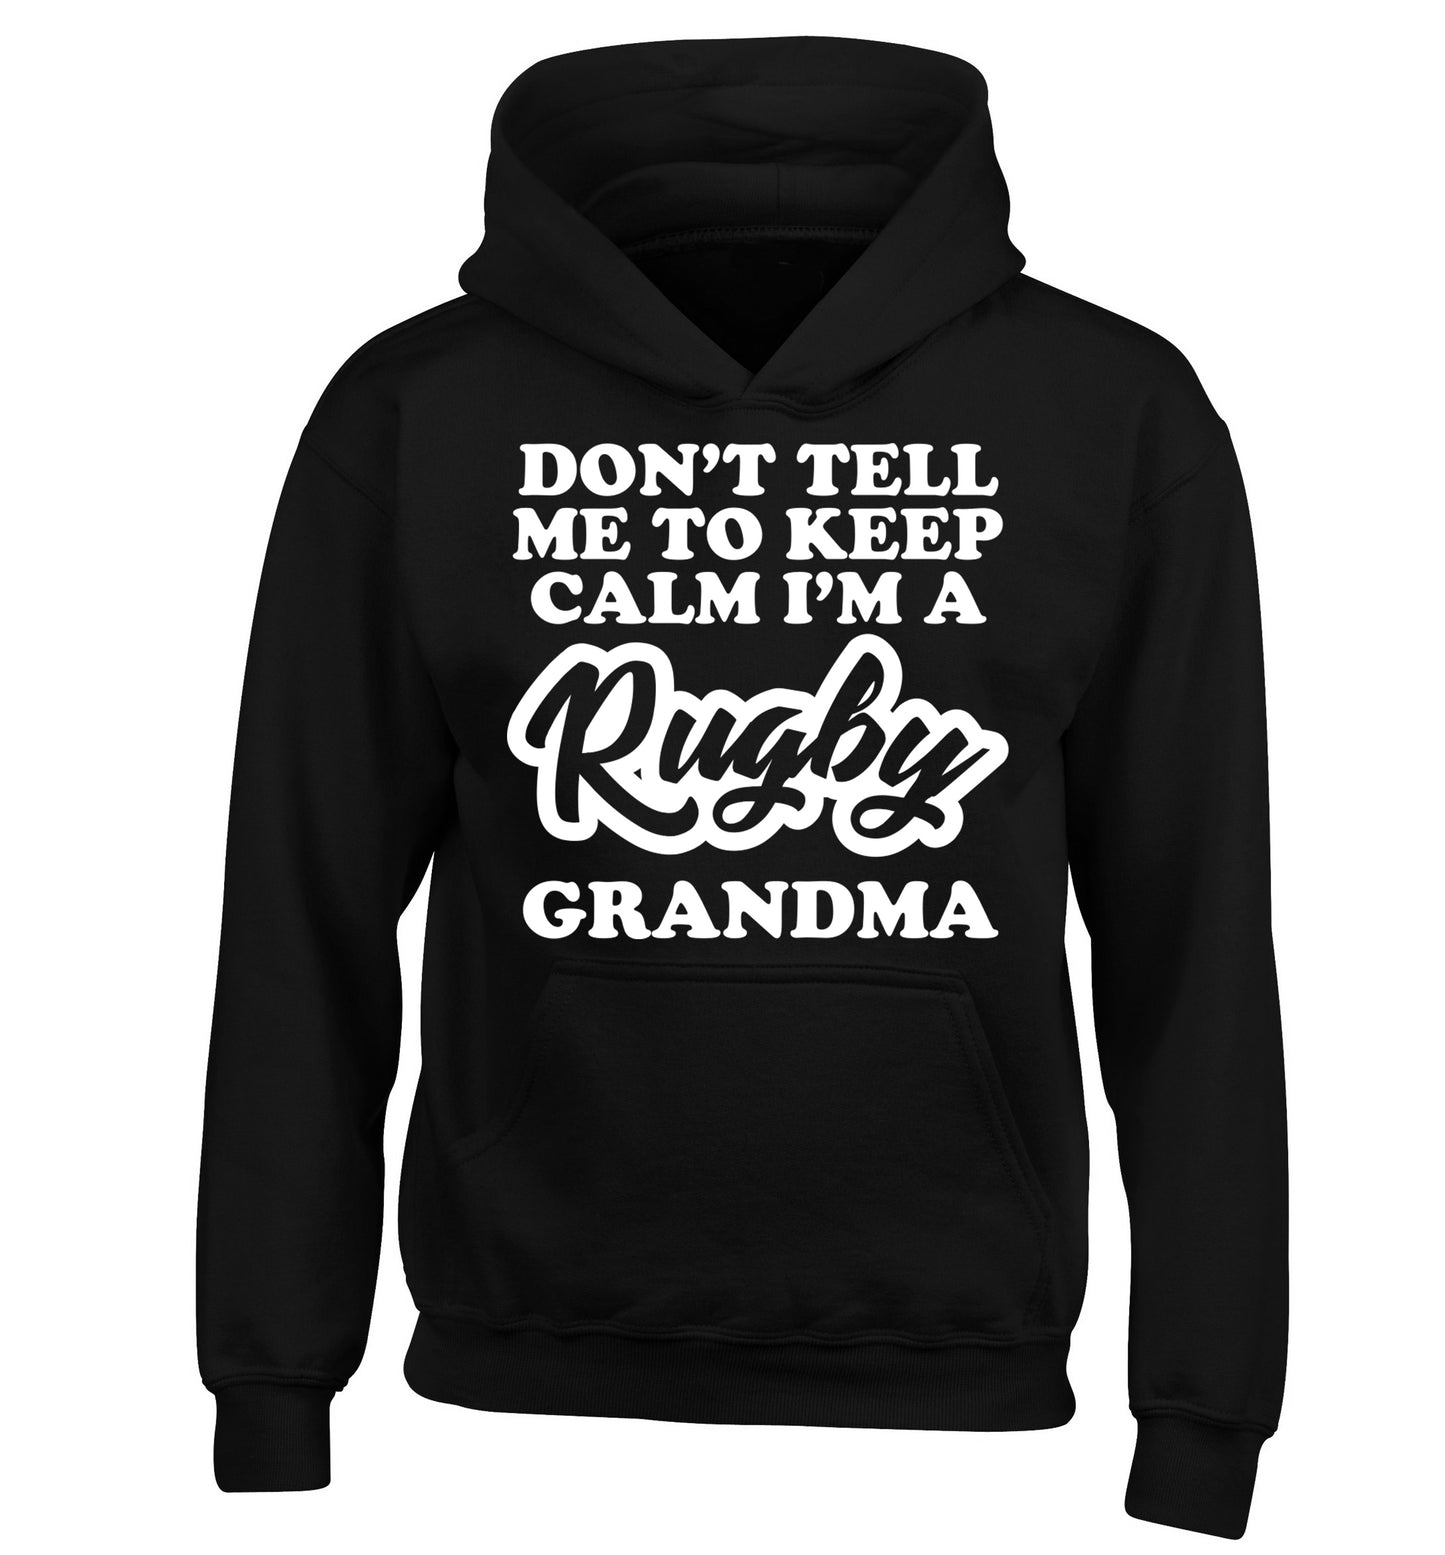 Don't tell me to keep calm I'm a rugby grandma children's black hoodie 12-13 Years